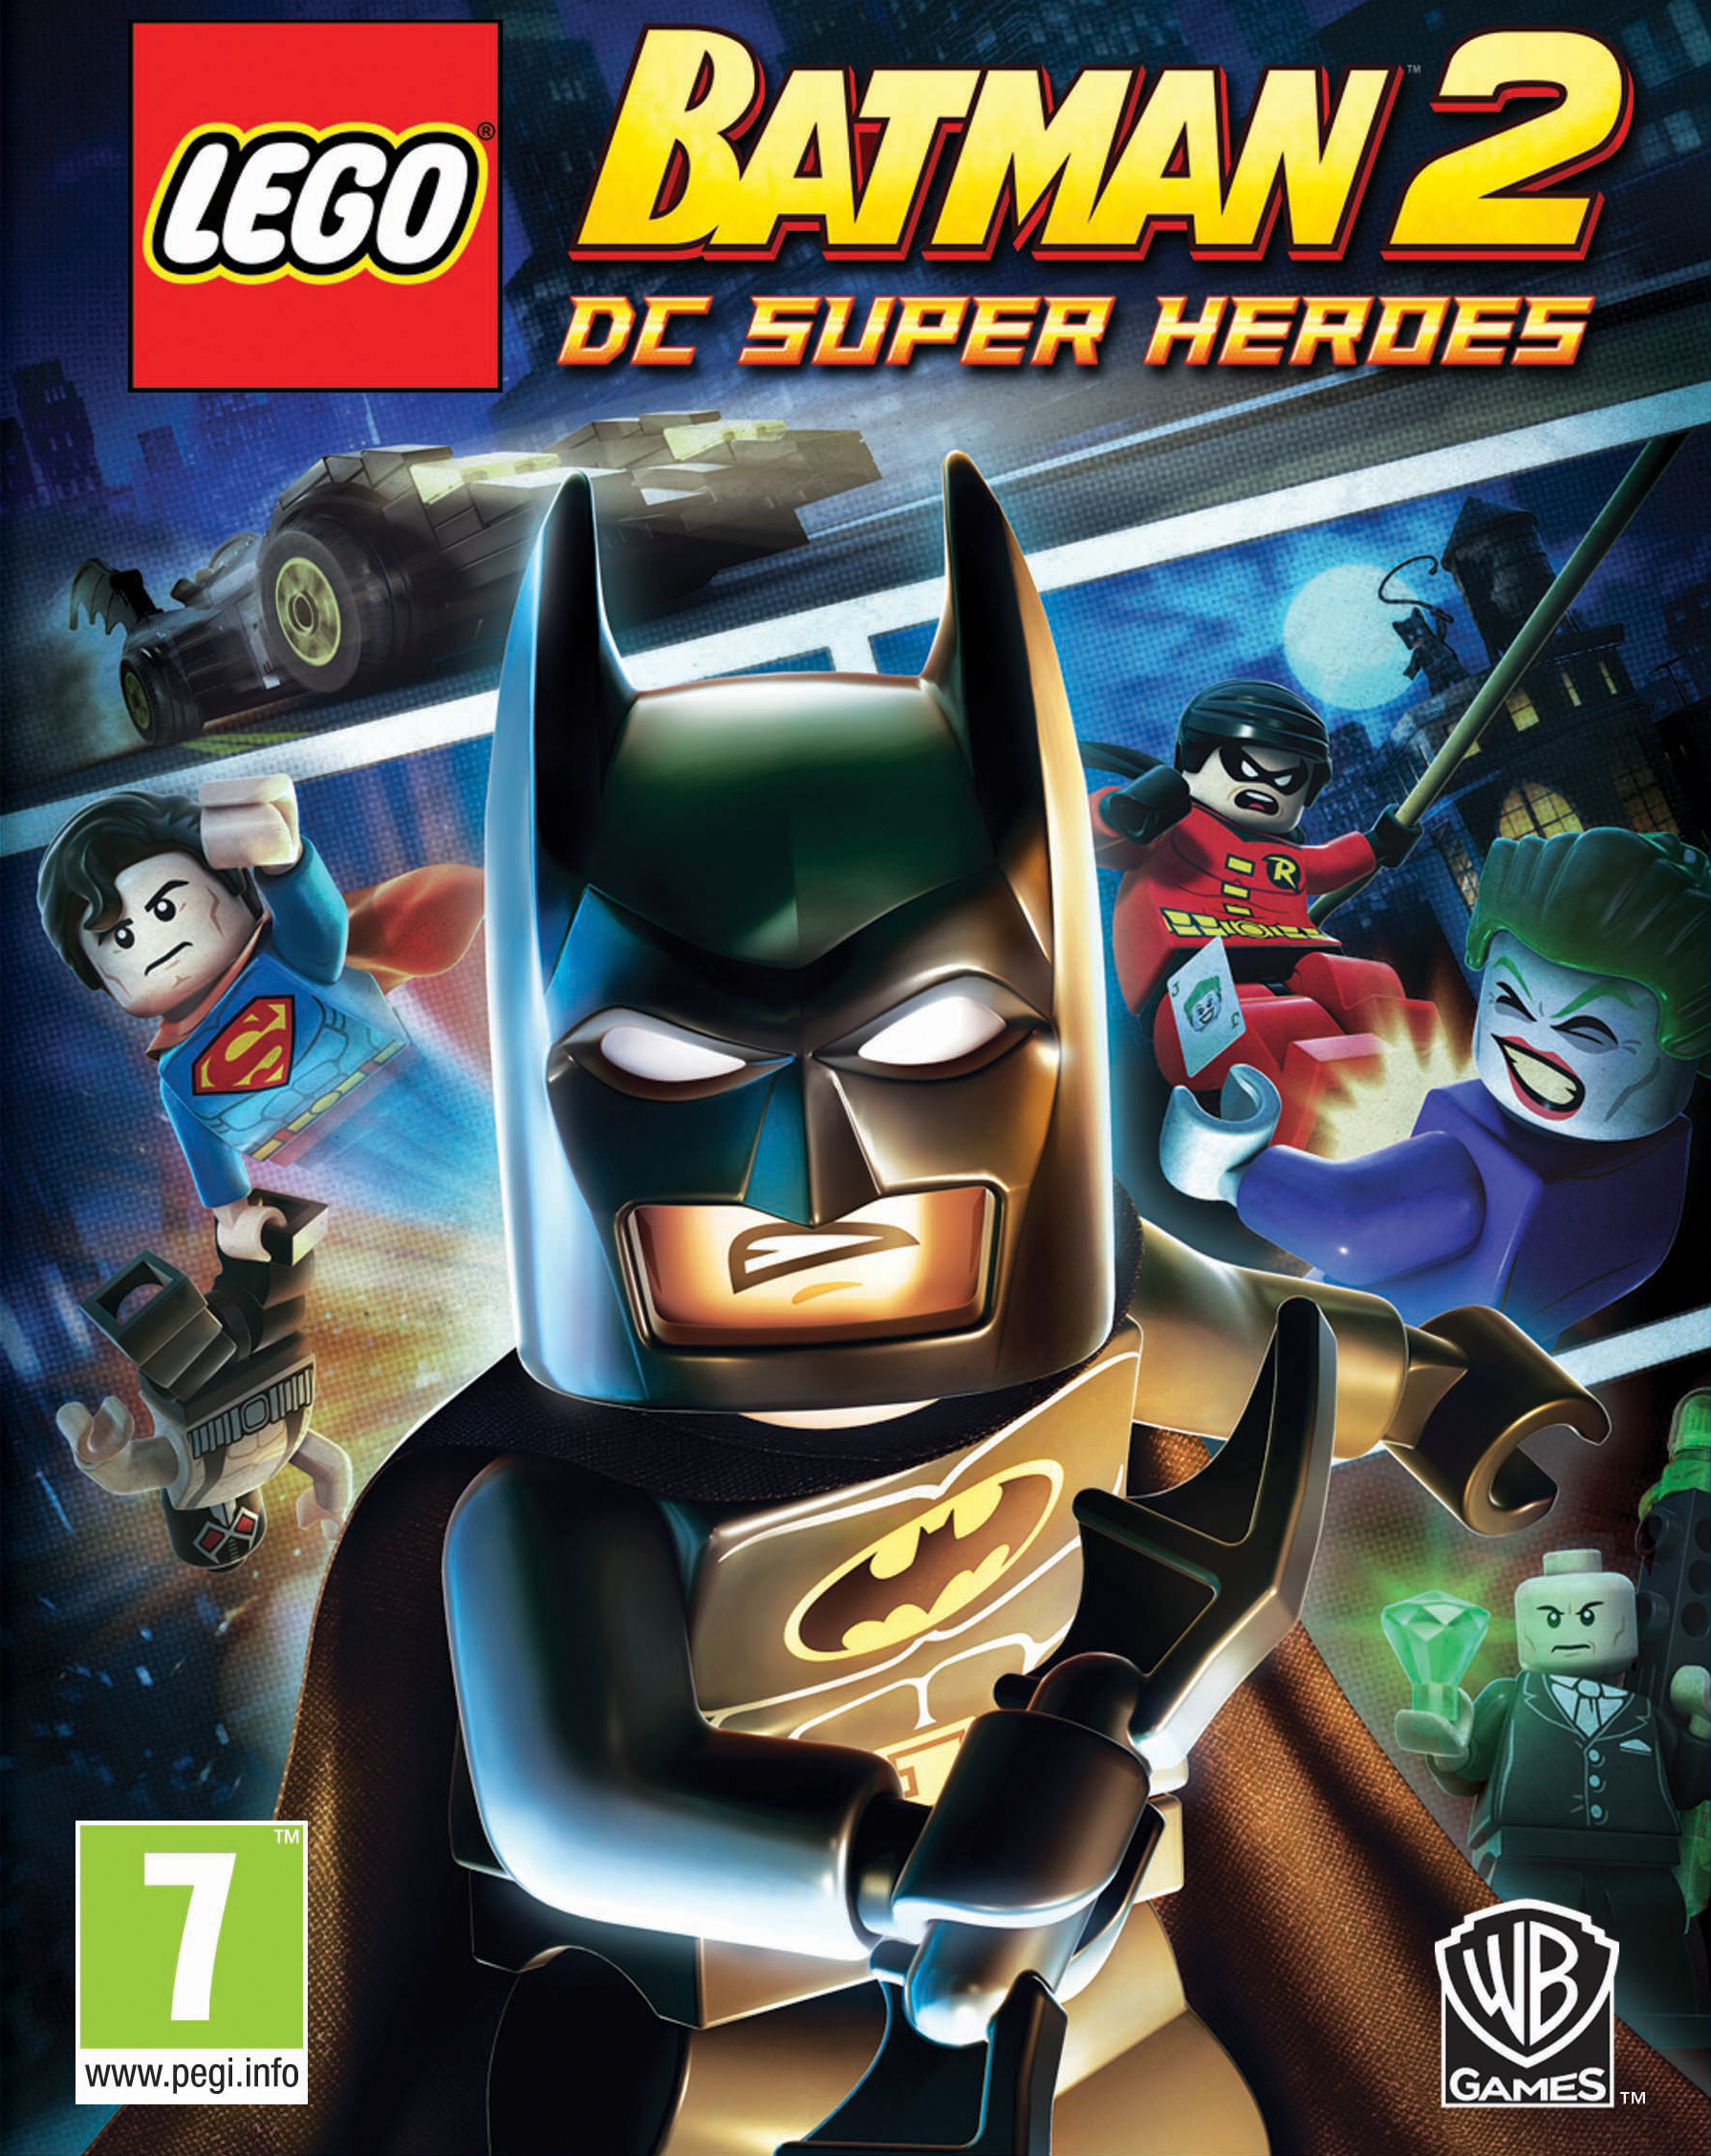 LEGO Batman 2: DC Super Heroes | LEGO Games Wiki | Fandom